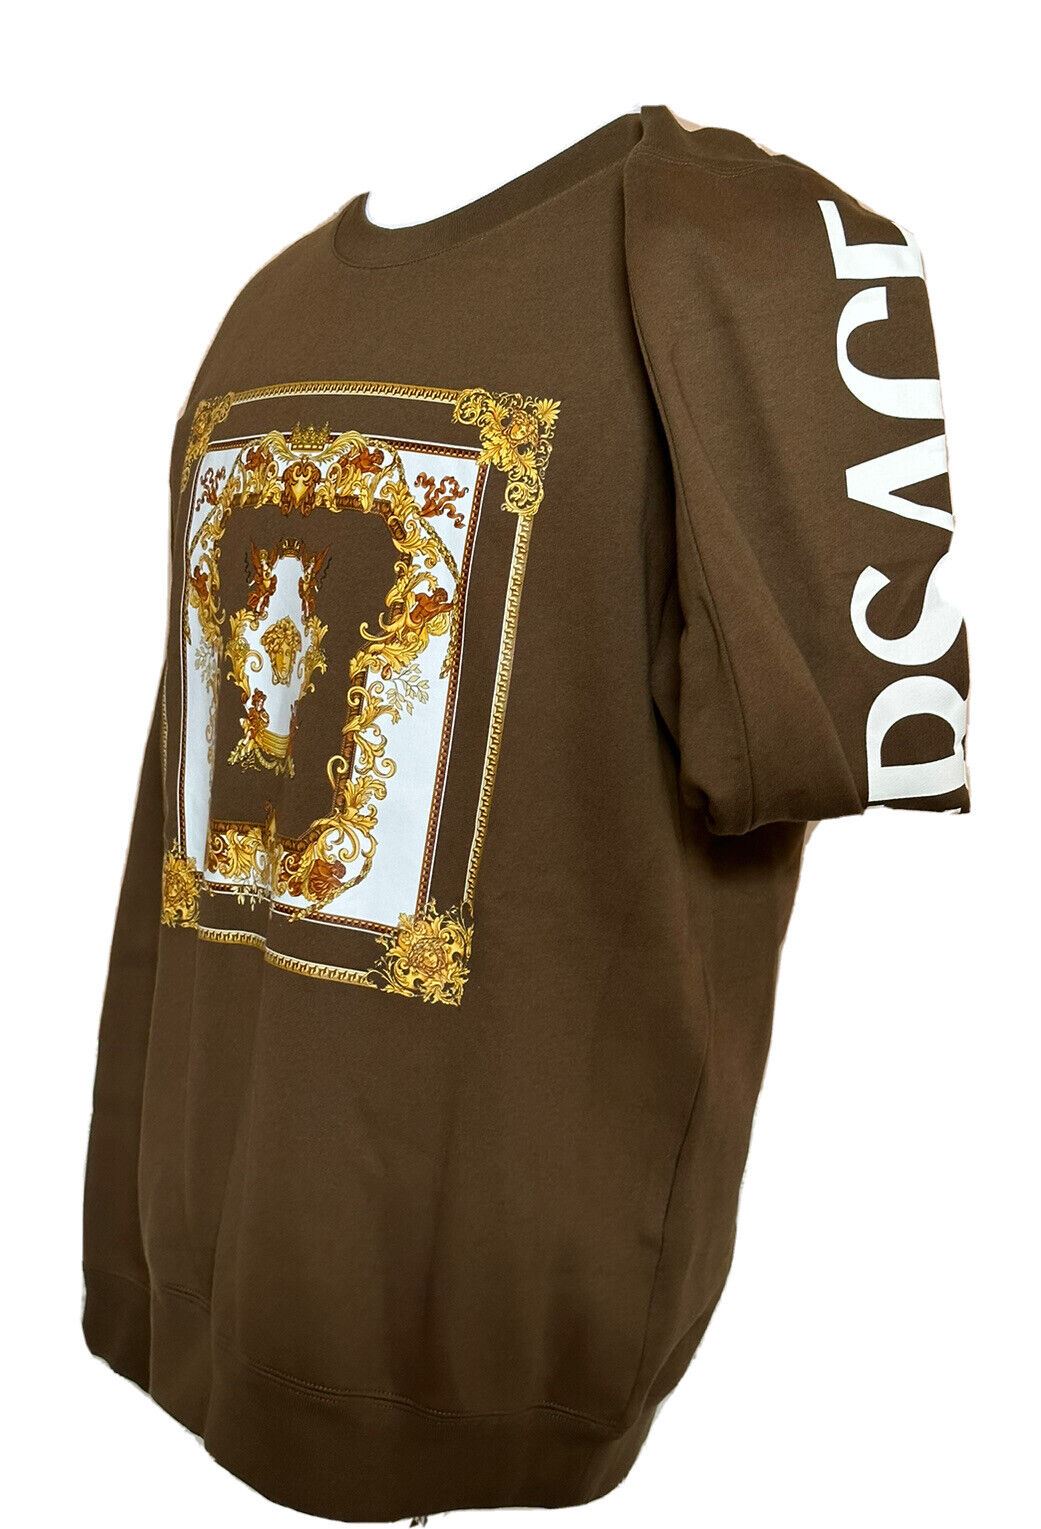 Neu mit Etikett: 850 $ Versace Medusa Renaissance Khaki Baumwoll-Sweatshirt 4XL 1008282 